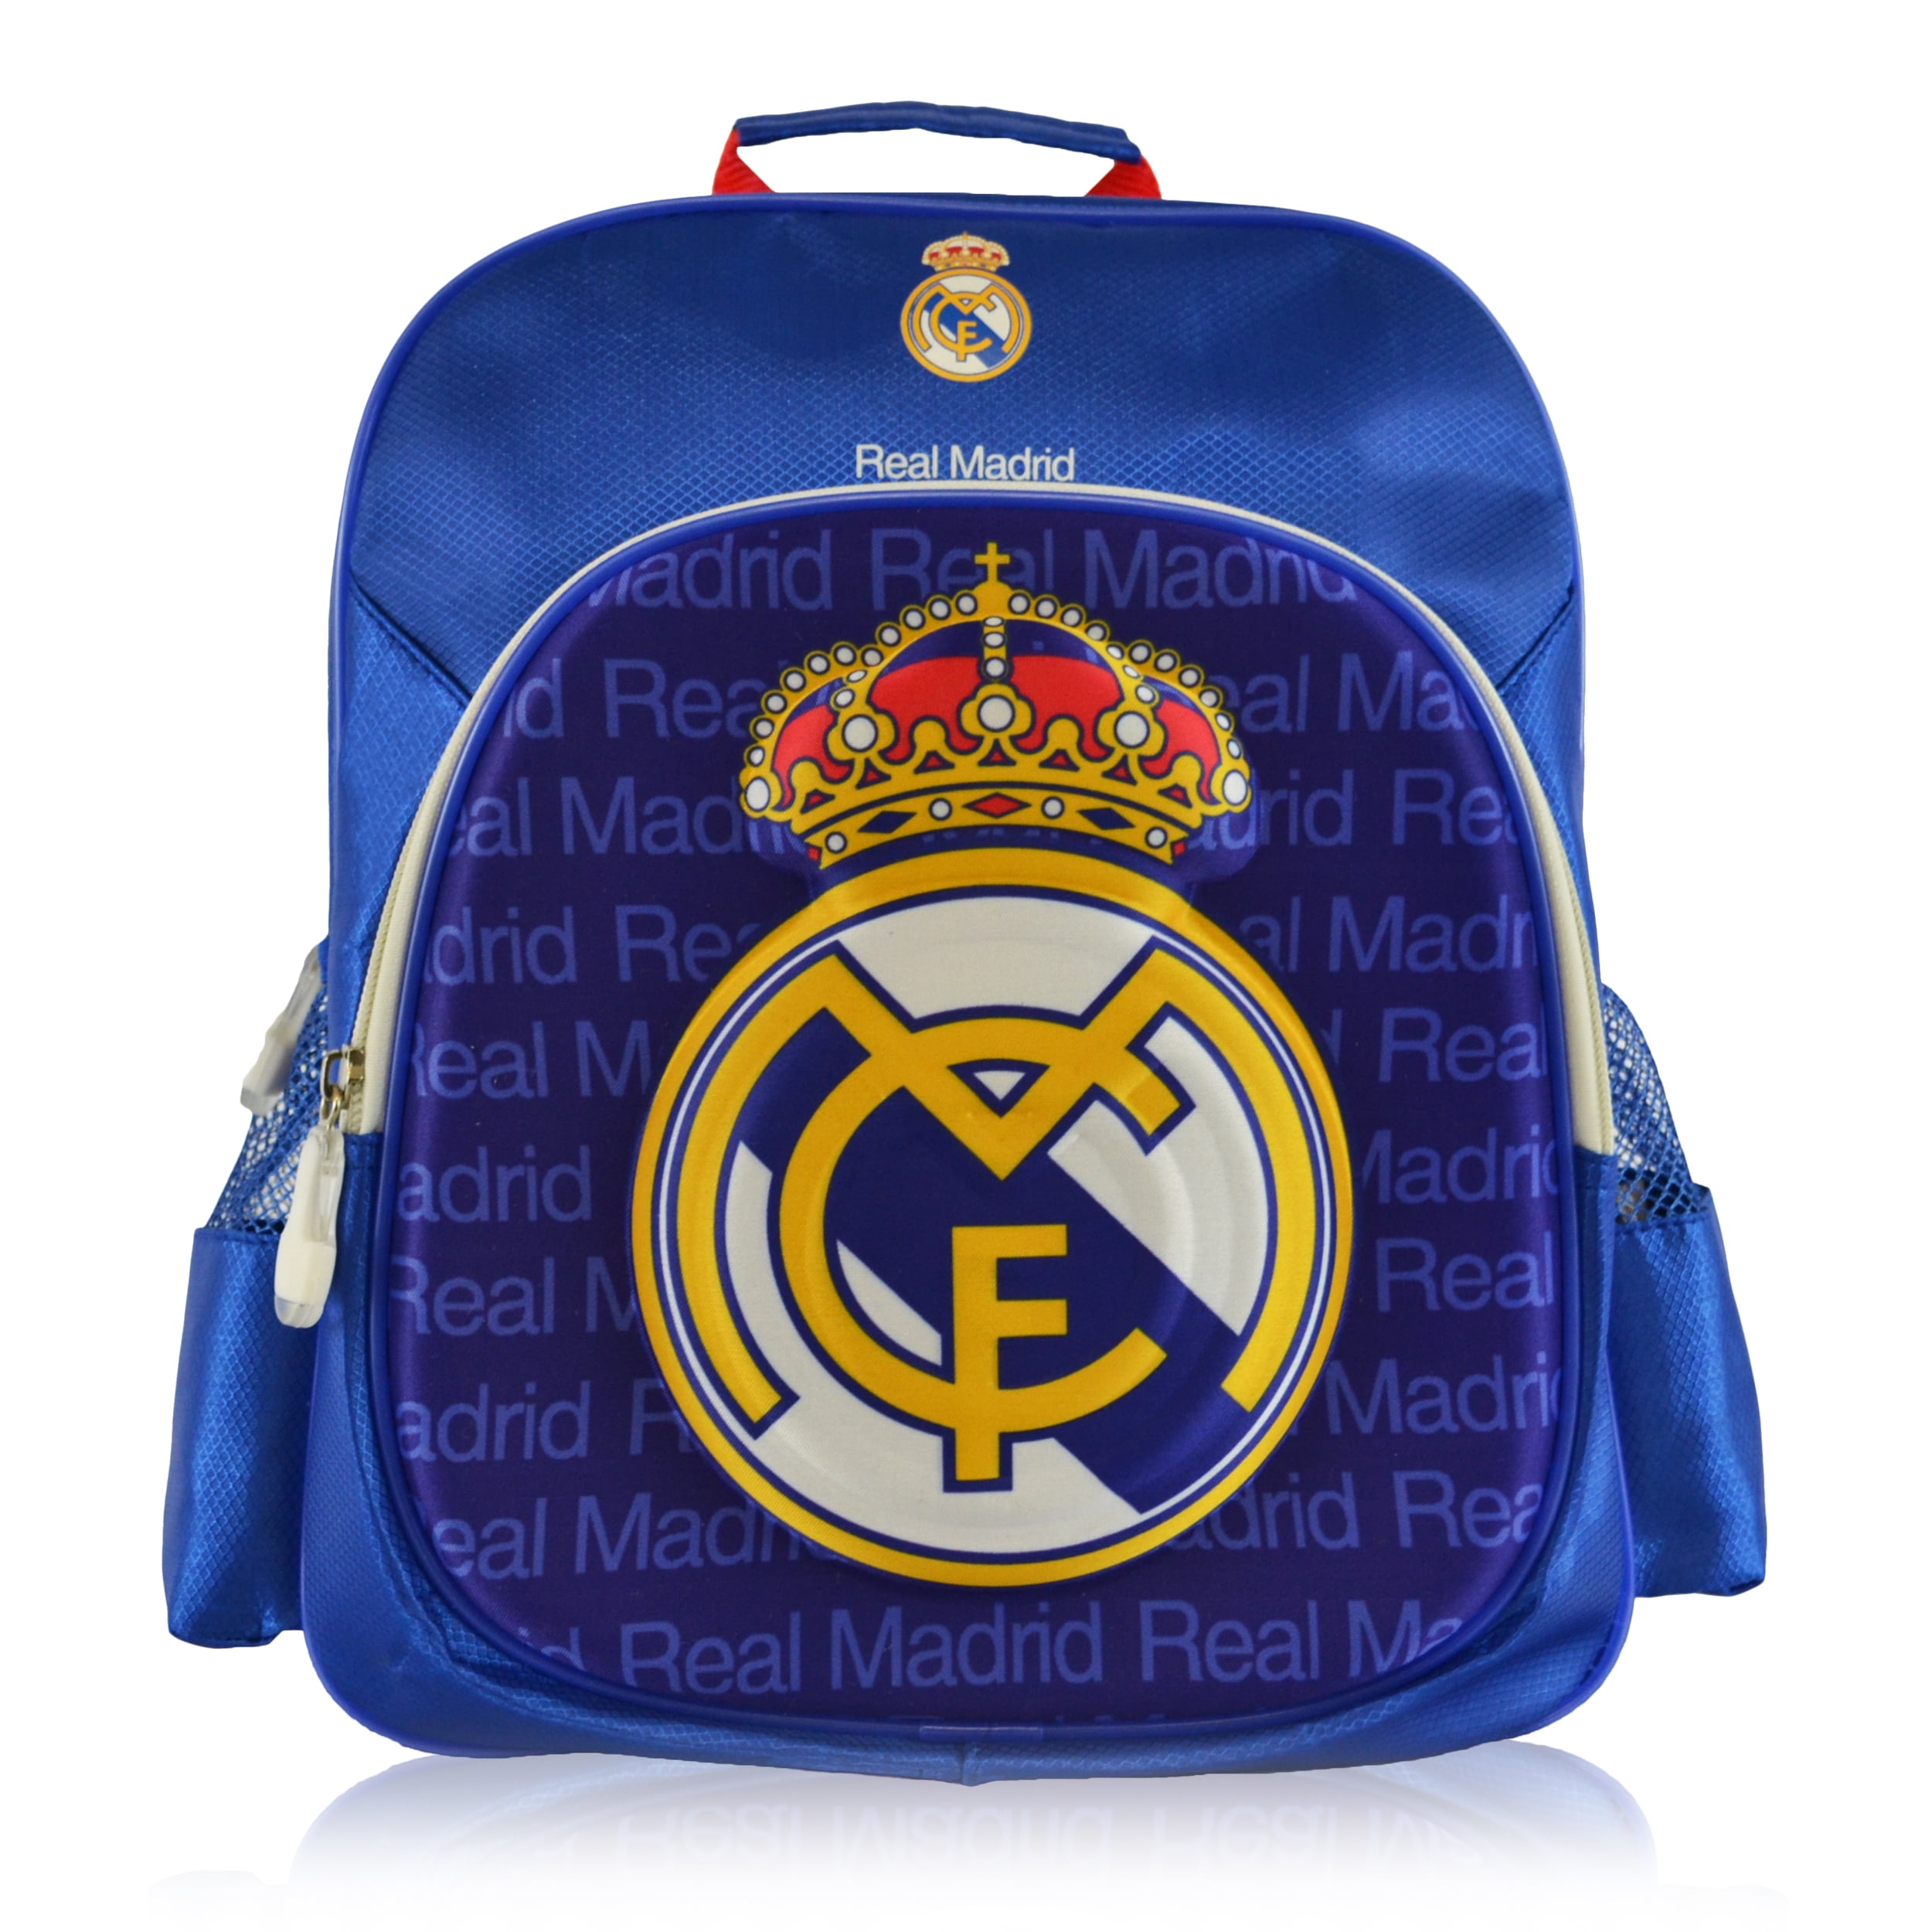 Maccabi Art Real Madrid Lunch Bag 